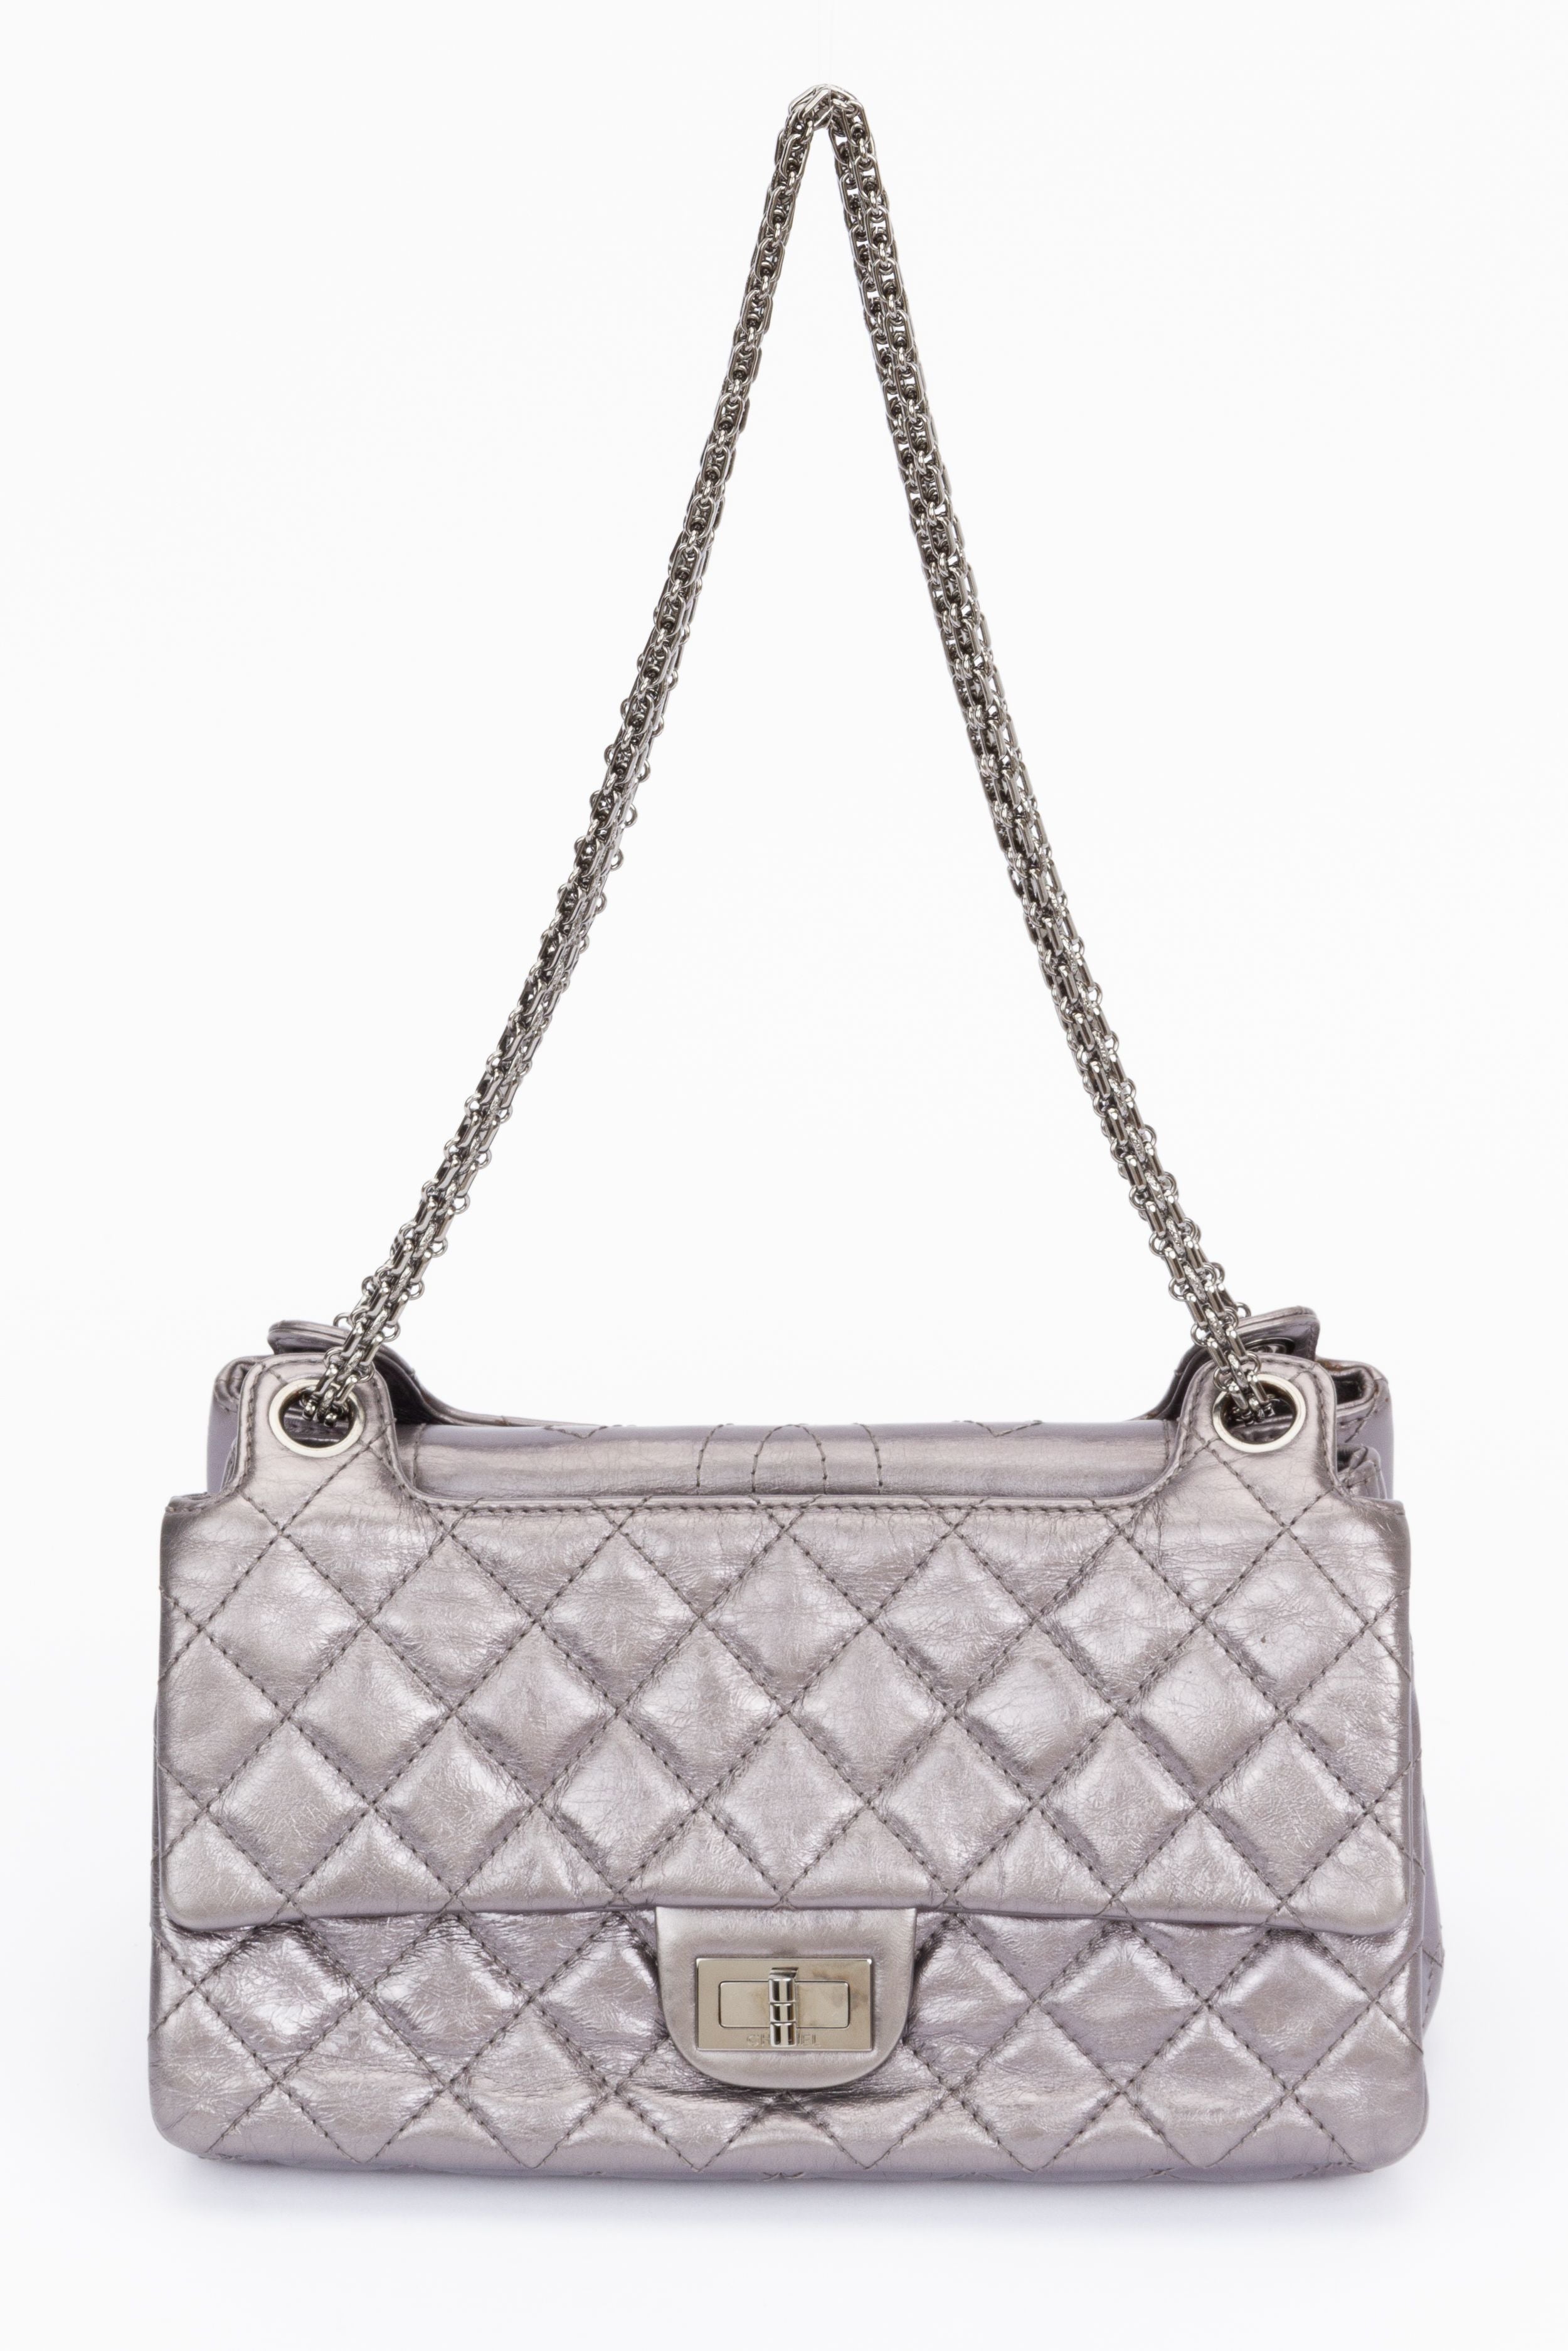 FWRD Renew Chanel Metallic Re-Issue 2.55 Flap Bag in Silver